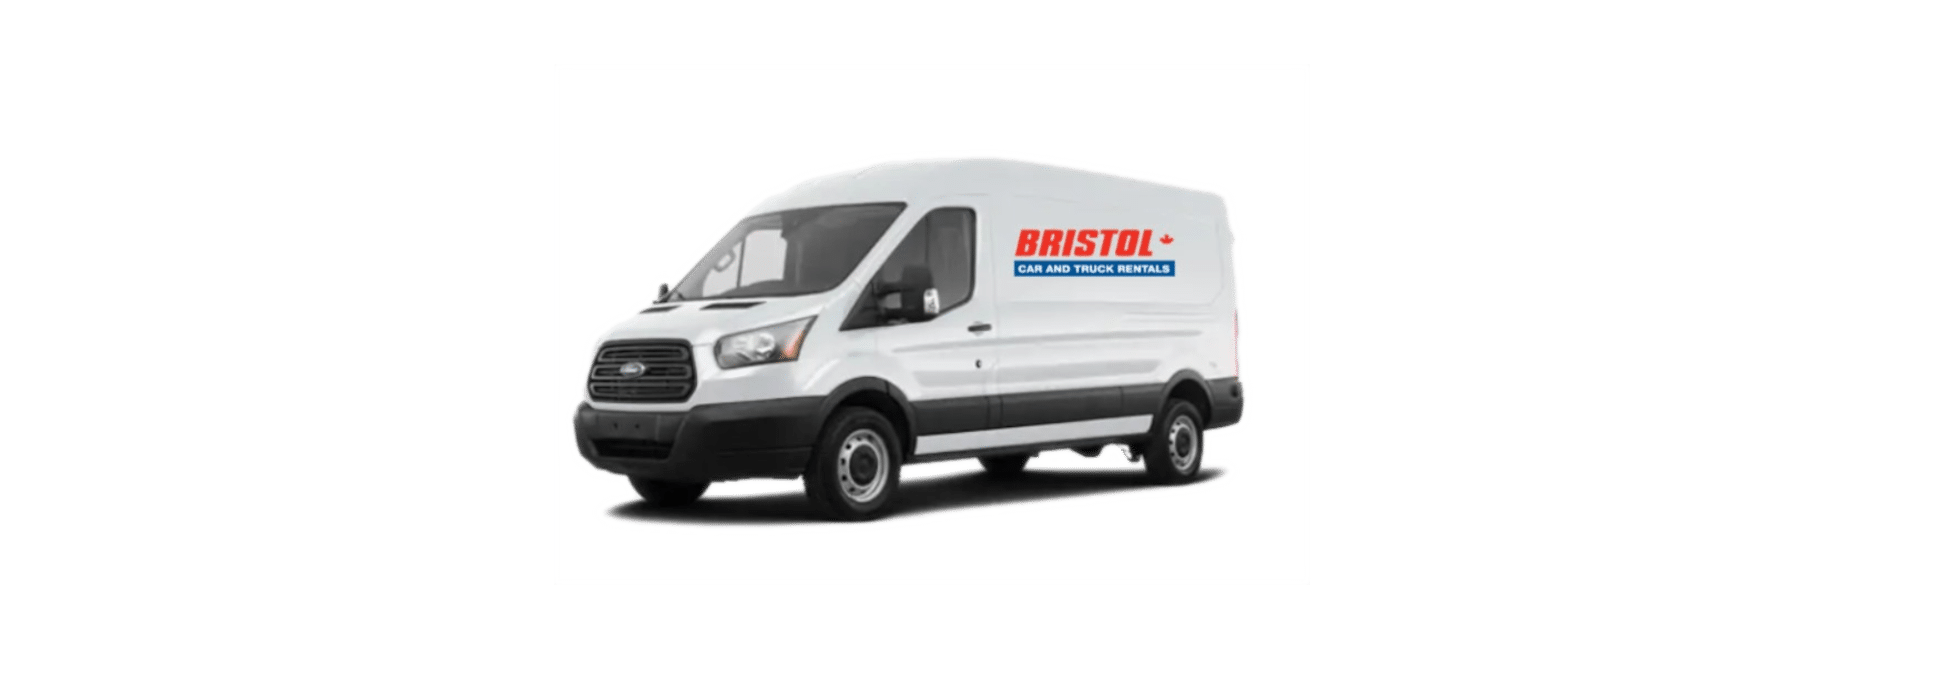 bristol car and truck rental cargo van